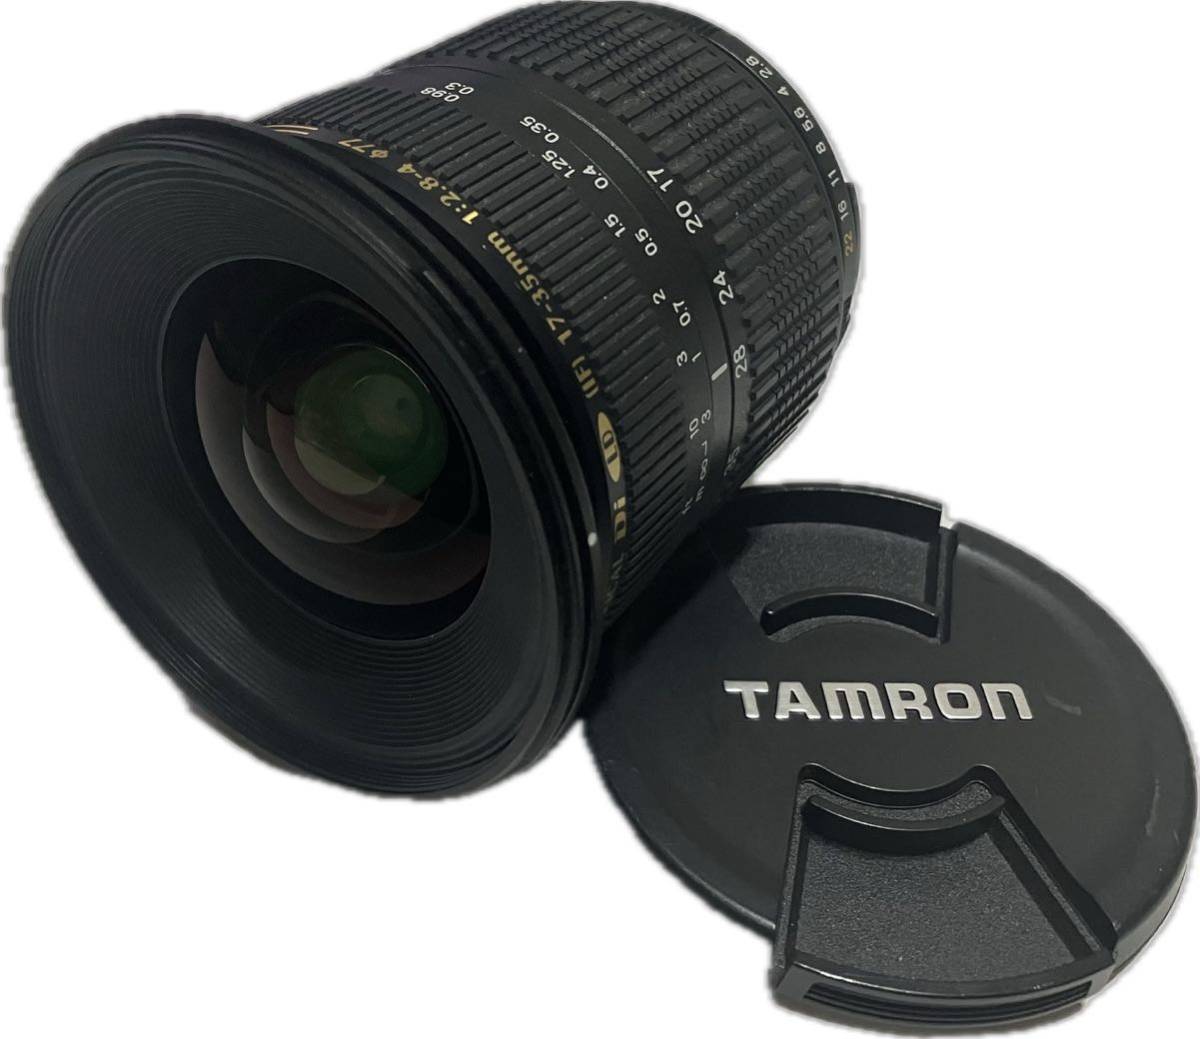 TAMRON SP AF 17-35mm F/2.8-4 Di LD Aspherical [IF] (Model A05